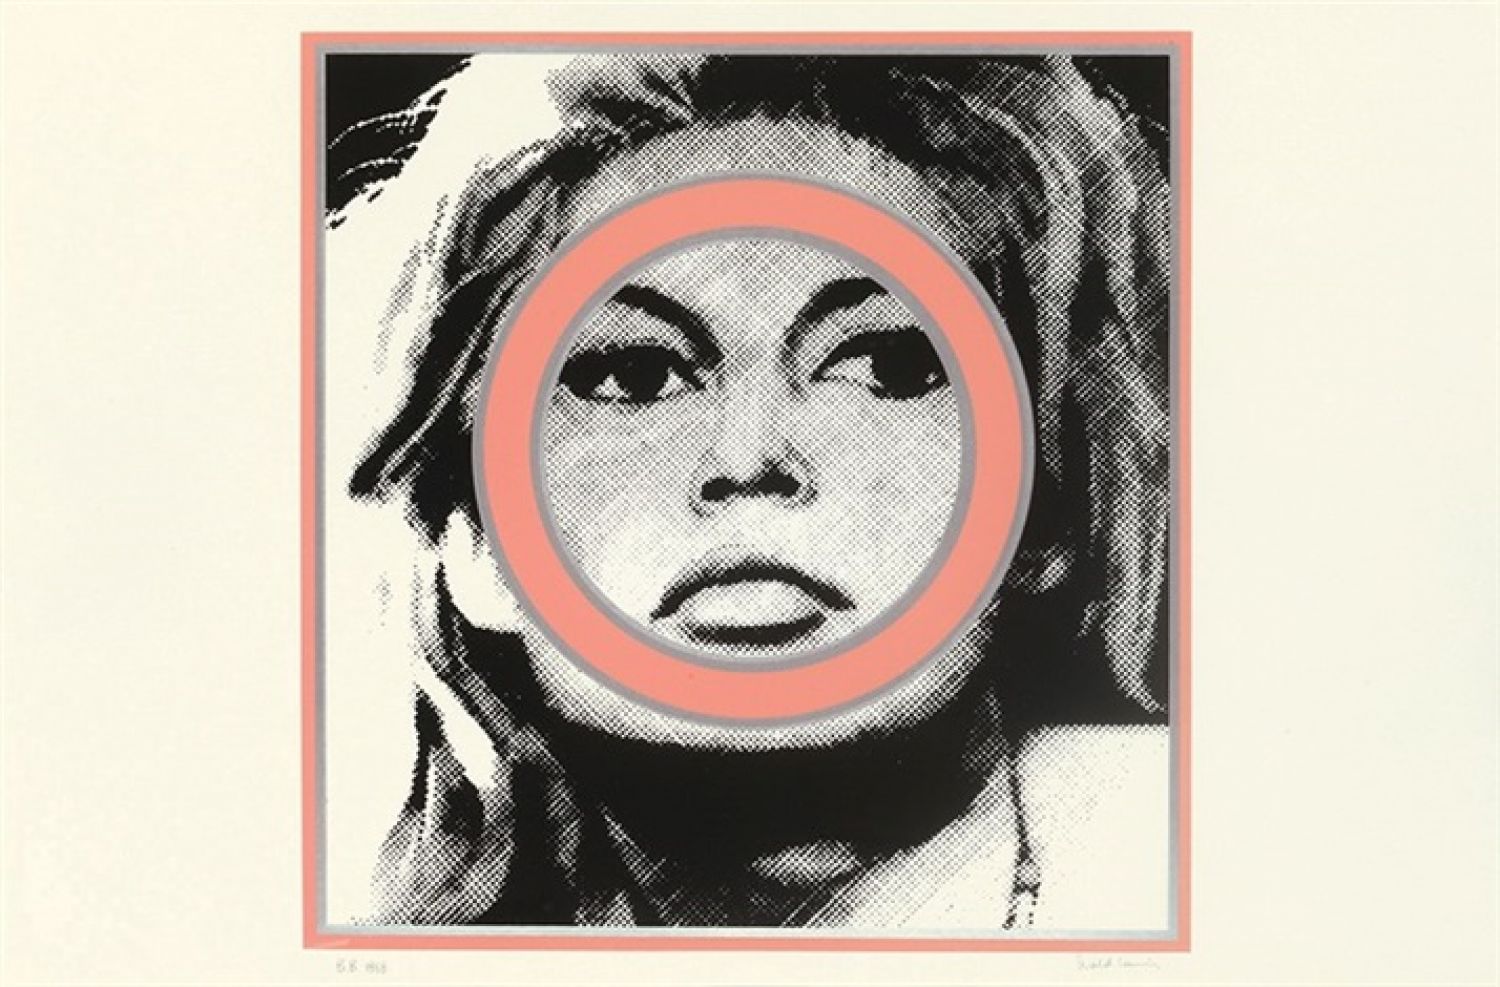 Gerald Laing, Brigitte Bardot, 1968-69